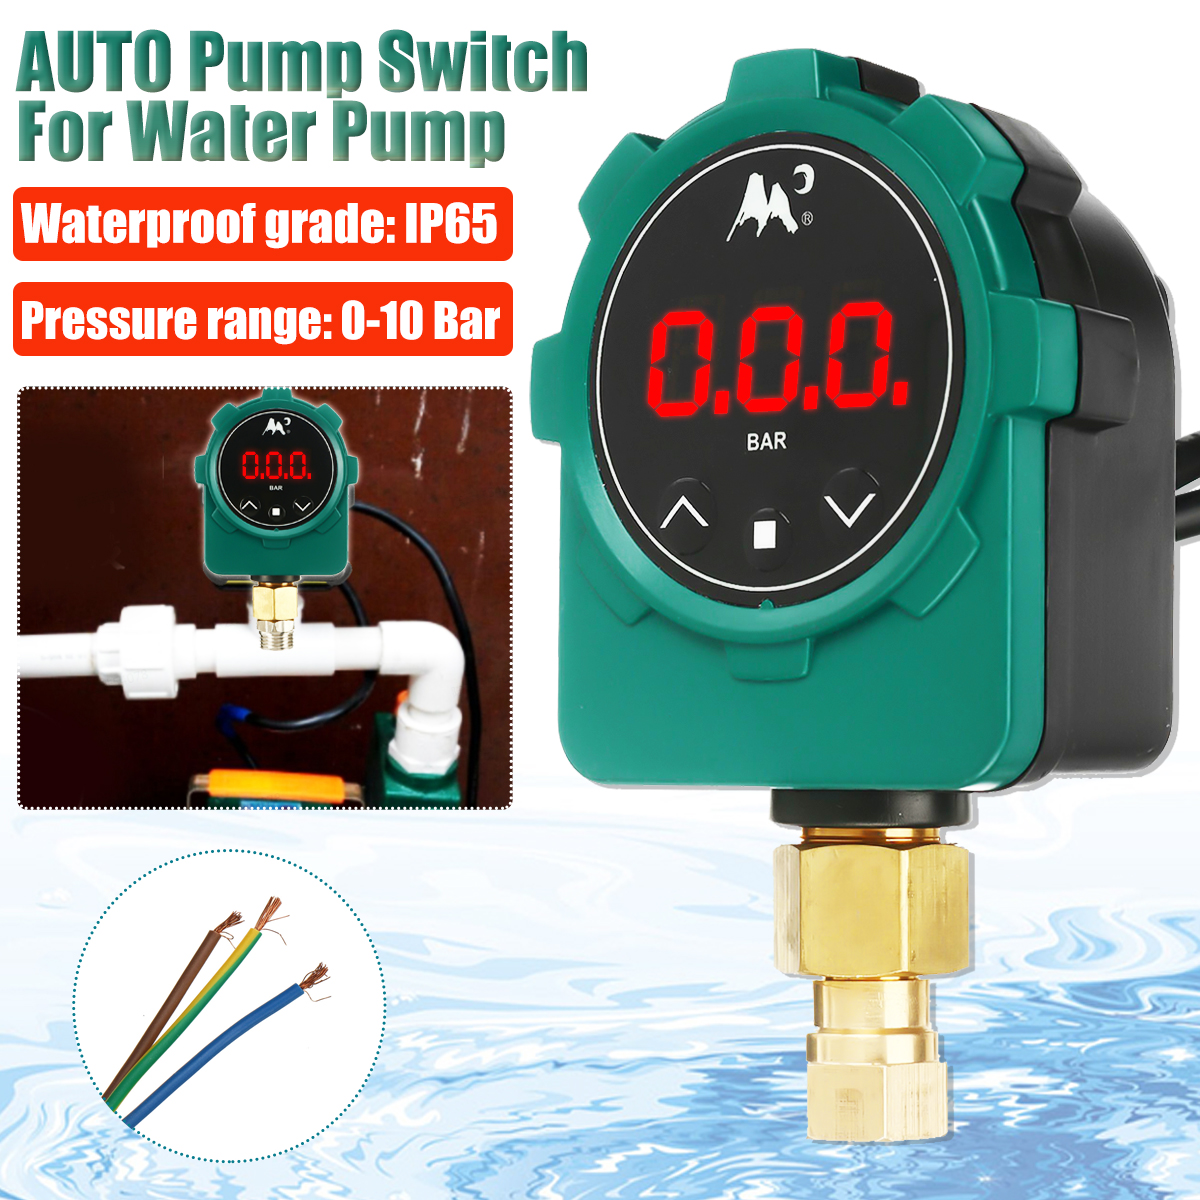 Digital-Pump-Water-Compressor-Pressure-Controller-Switch-For-Water-Pump-OnOFF-1904948-1